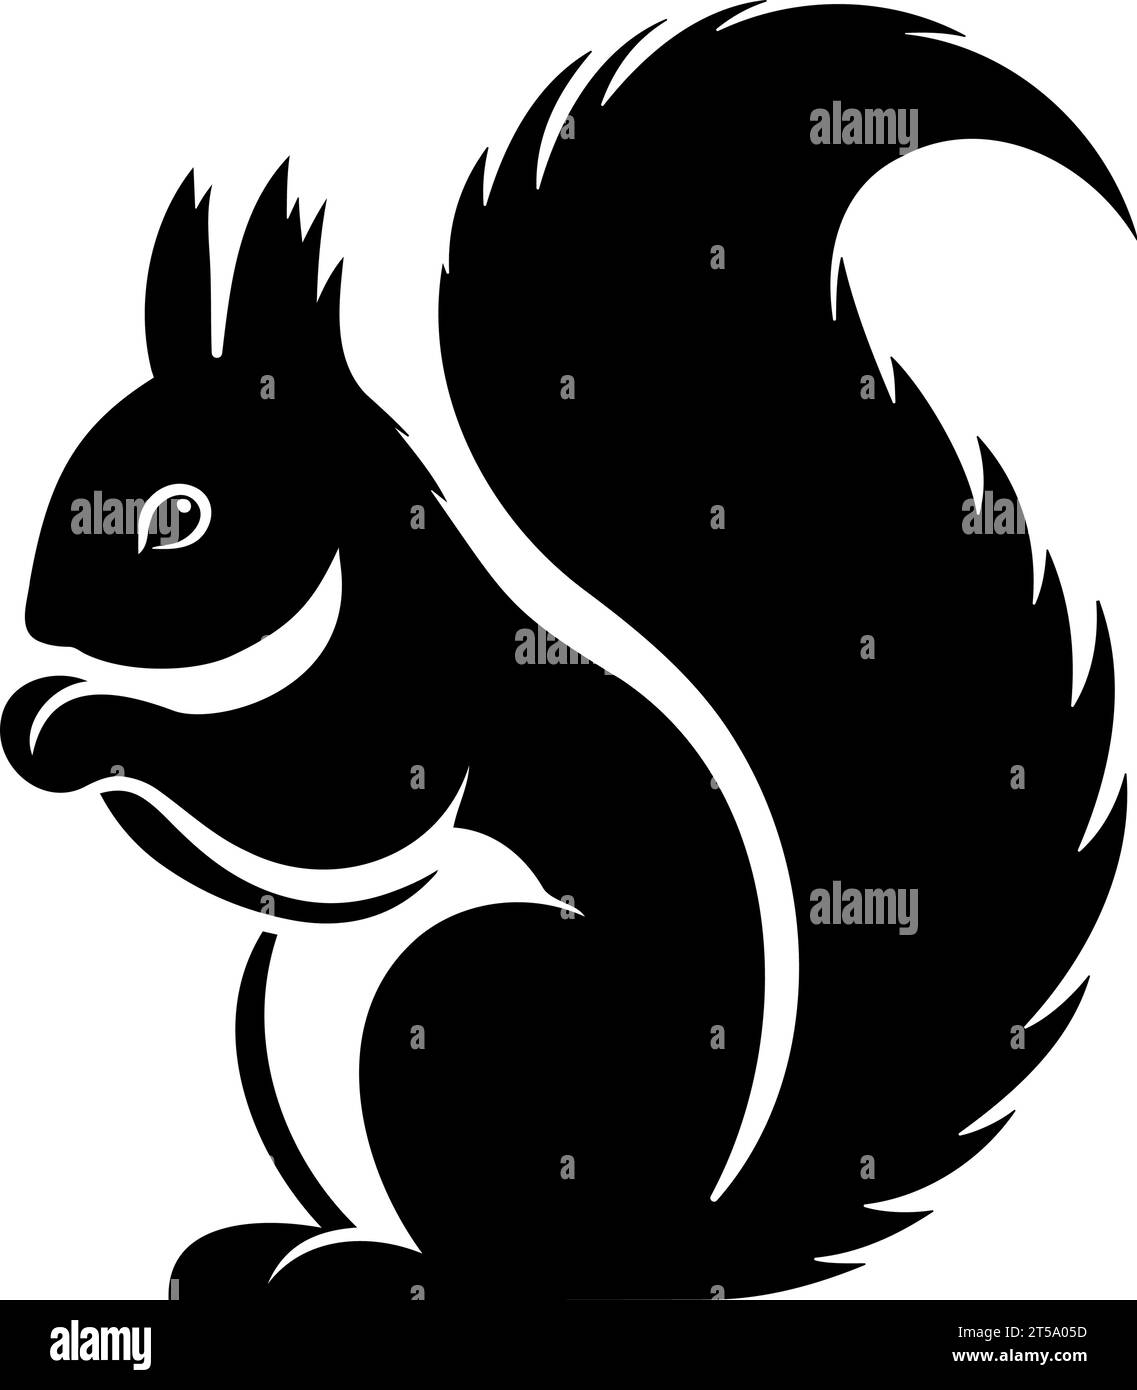 Squirrel silhouette logo design. vector illustration Stock Vector